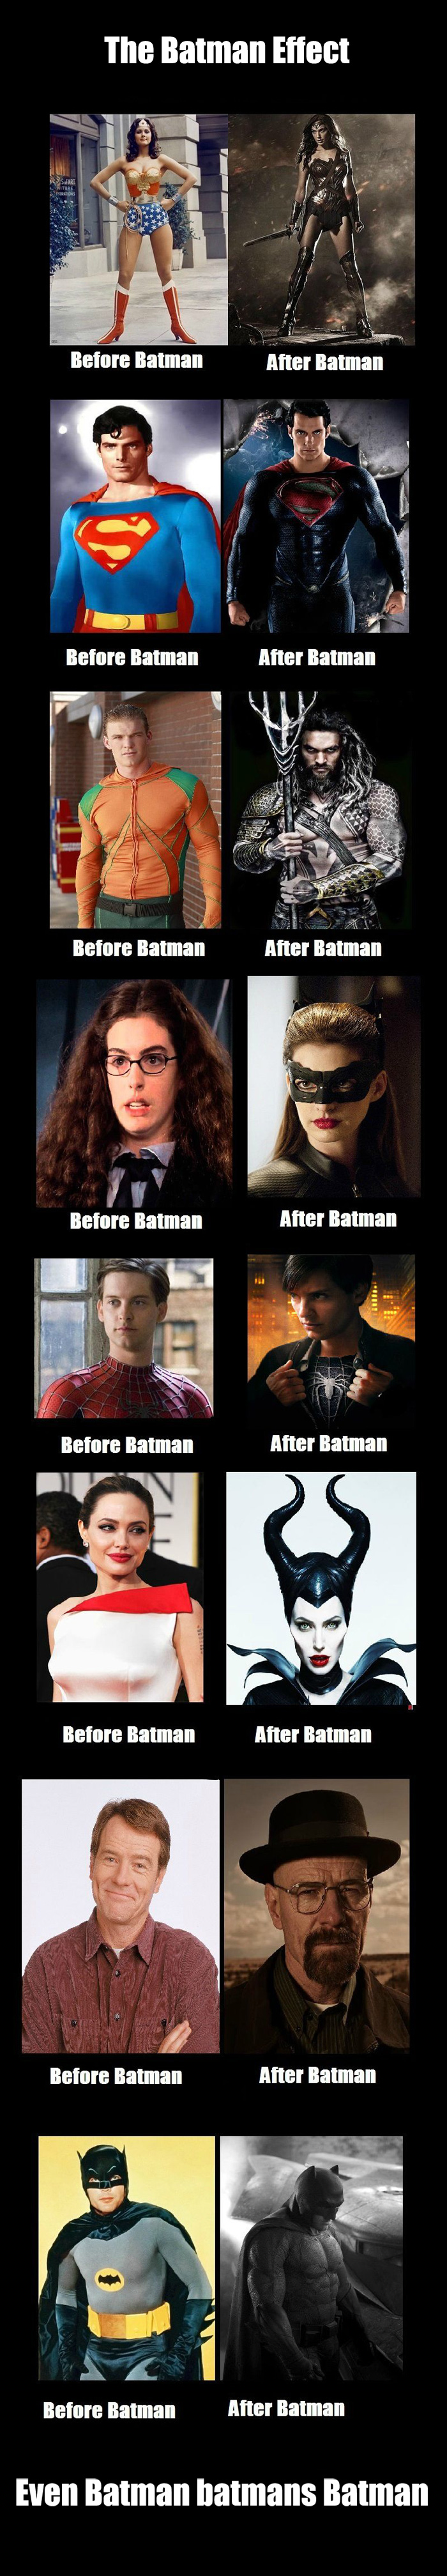 The Batman Effect